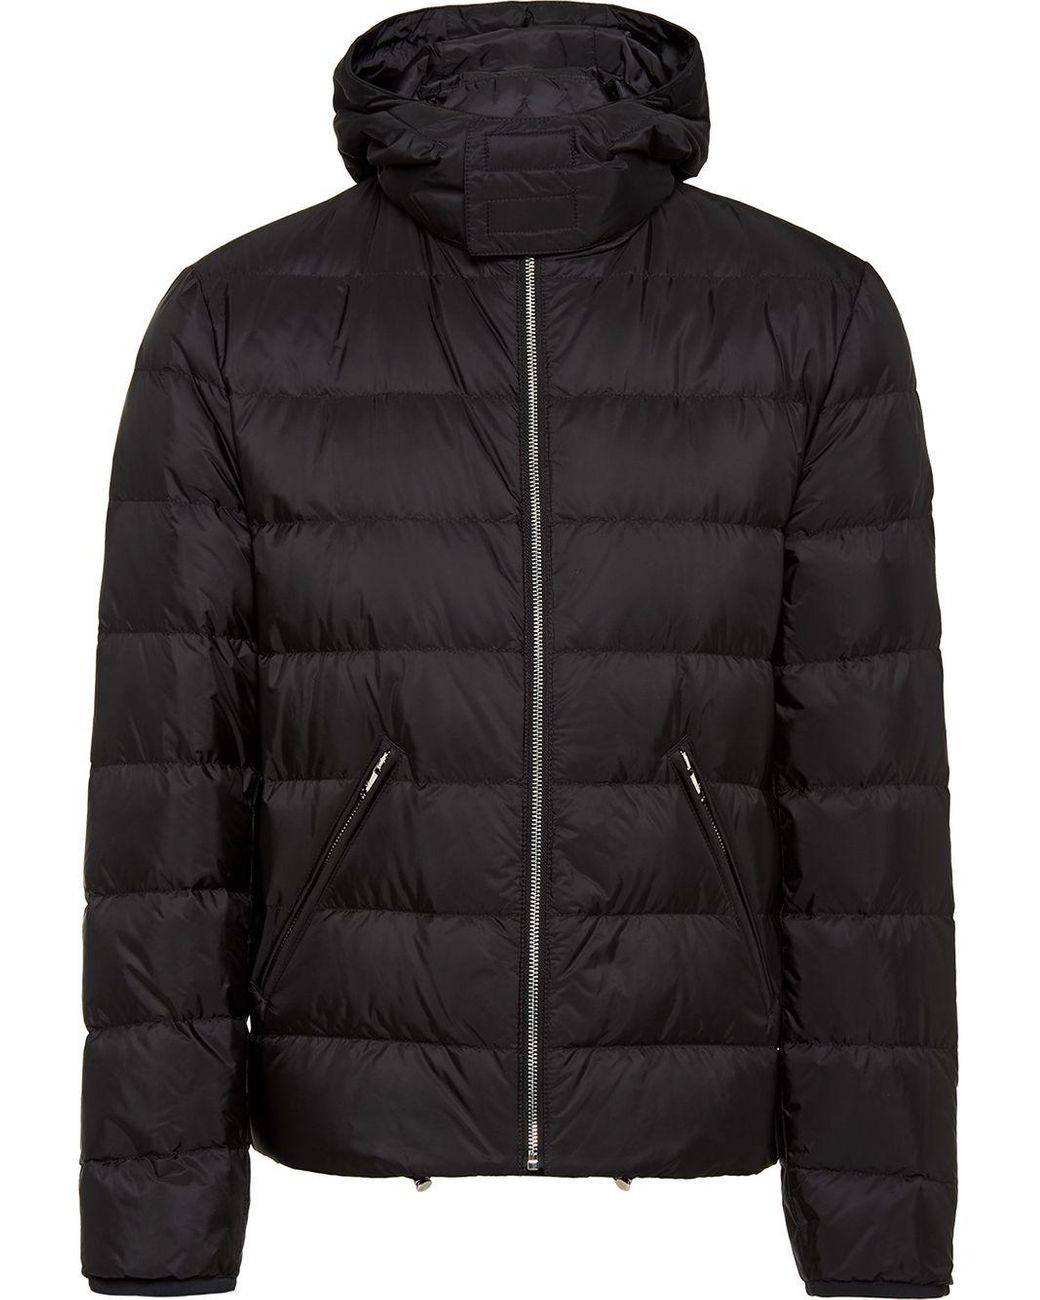 Prada Synthetic Hooded Puffer Jacket in Black for Men - Lyst